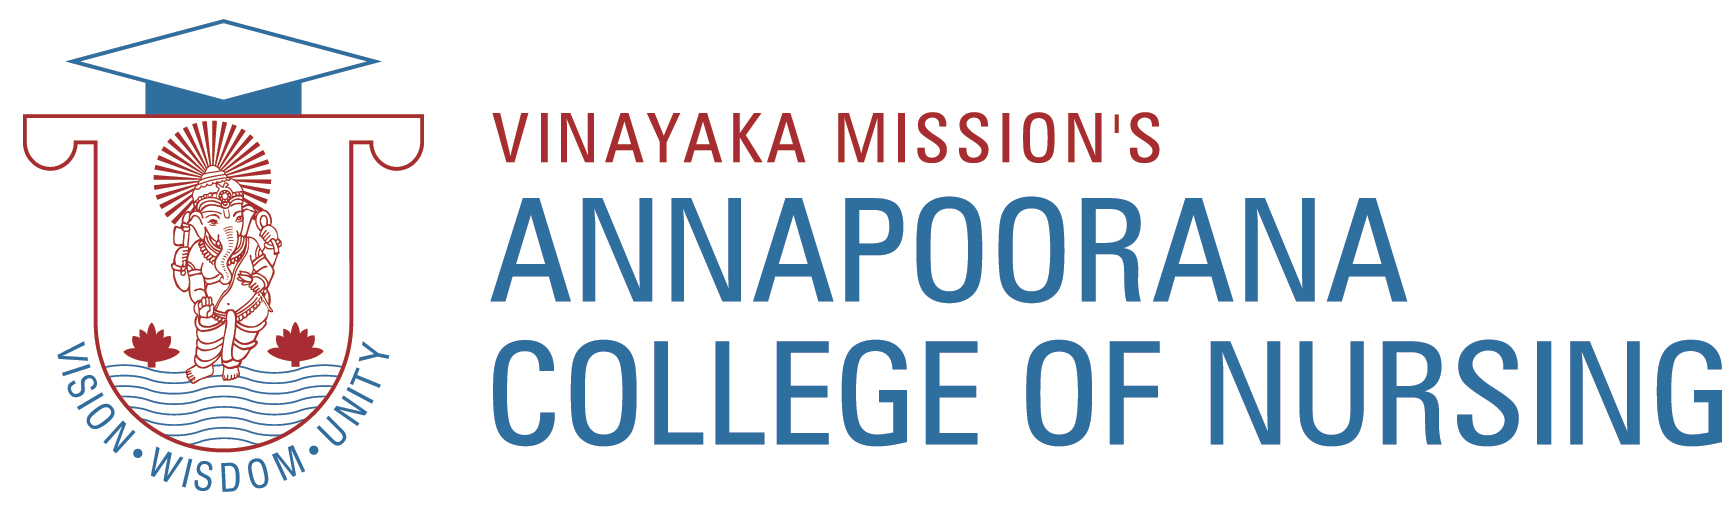 VINAYAKA MISSION'S ANNAPOORANA COLLEGE OF NURSING